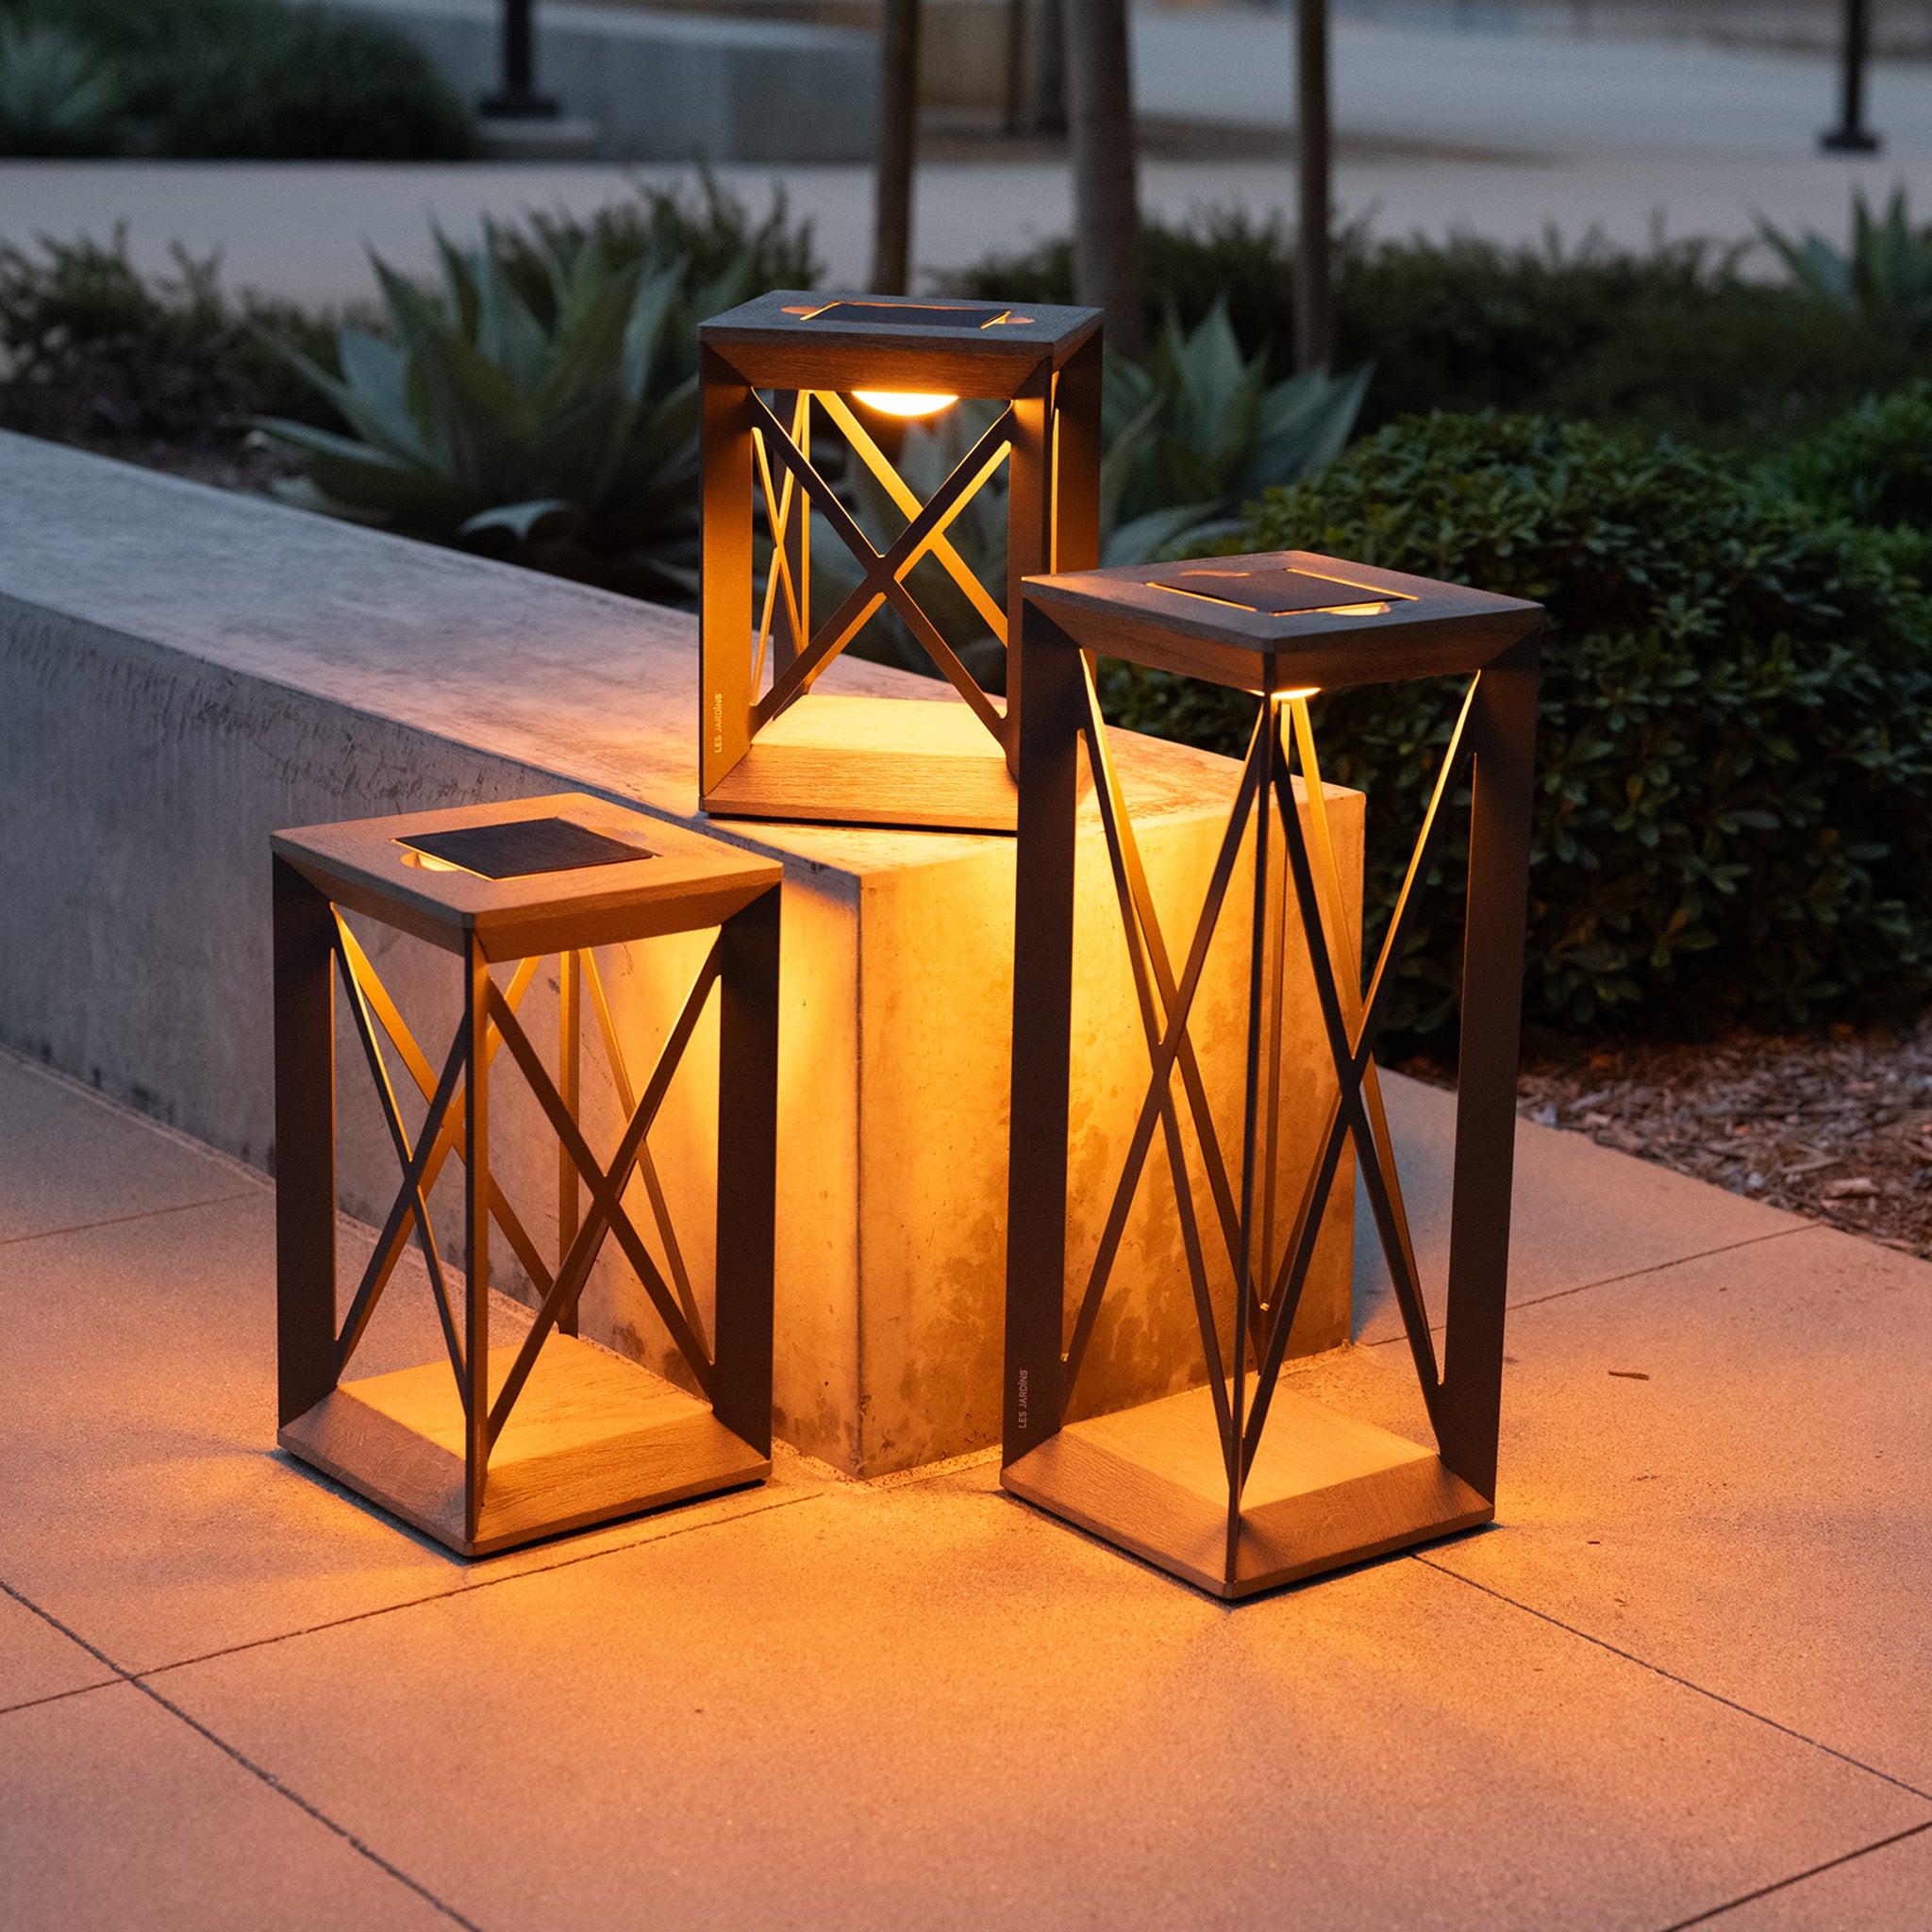 Soho high efficiency lantern in 3 sizes